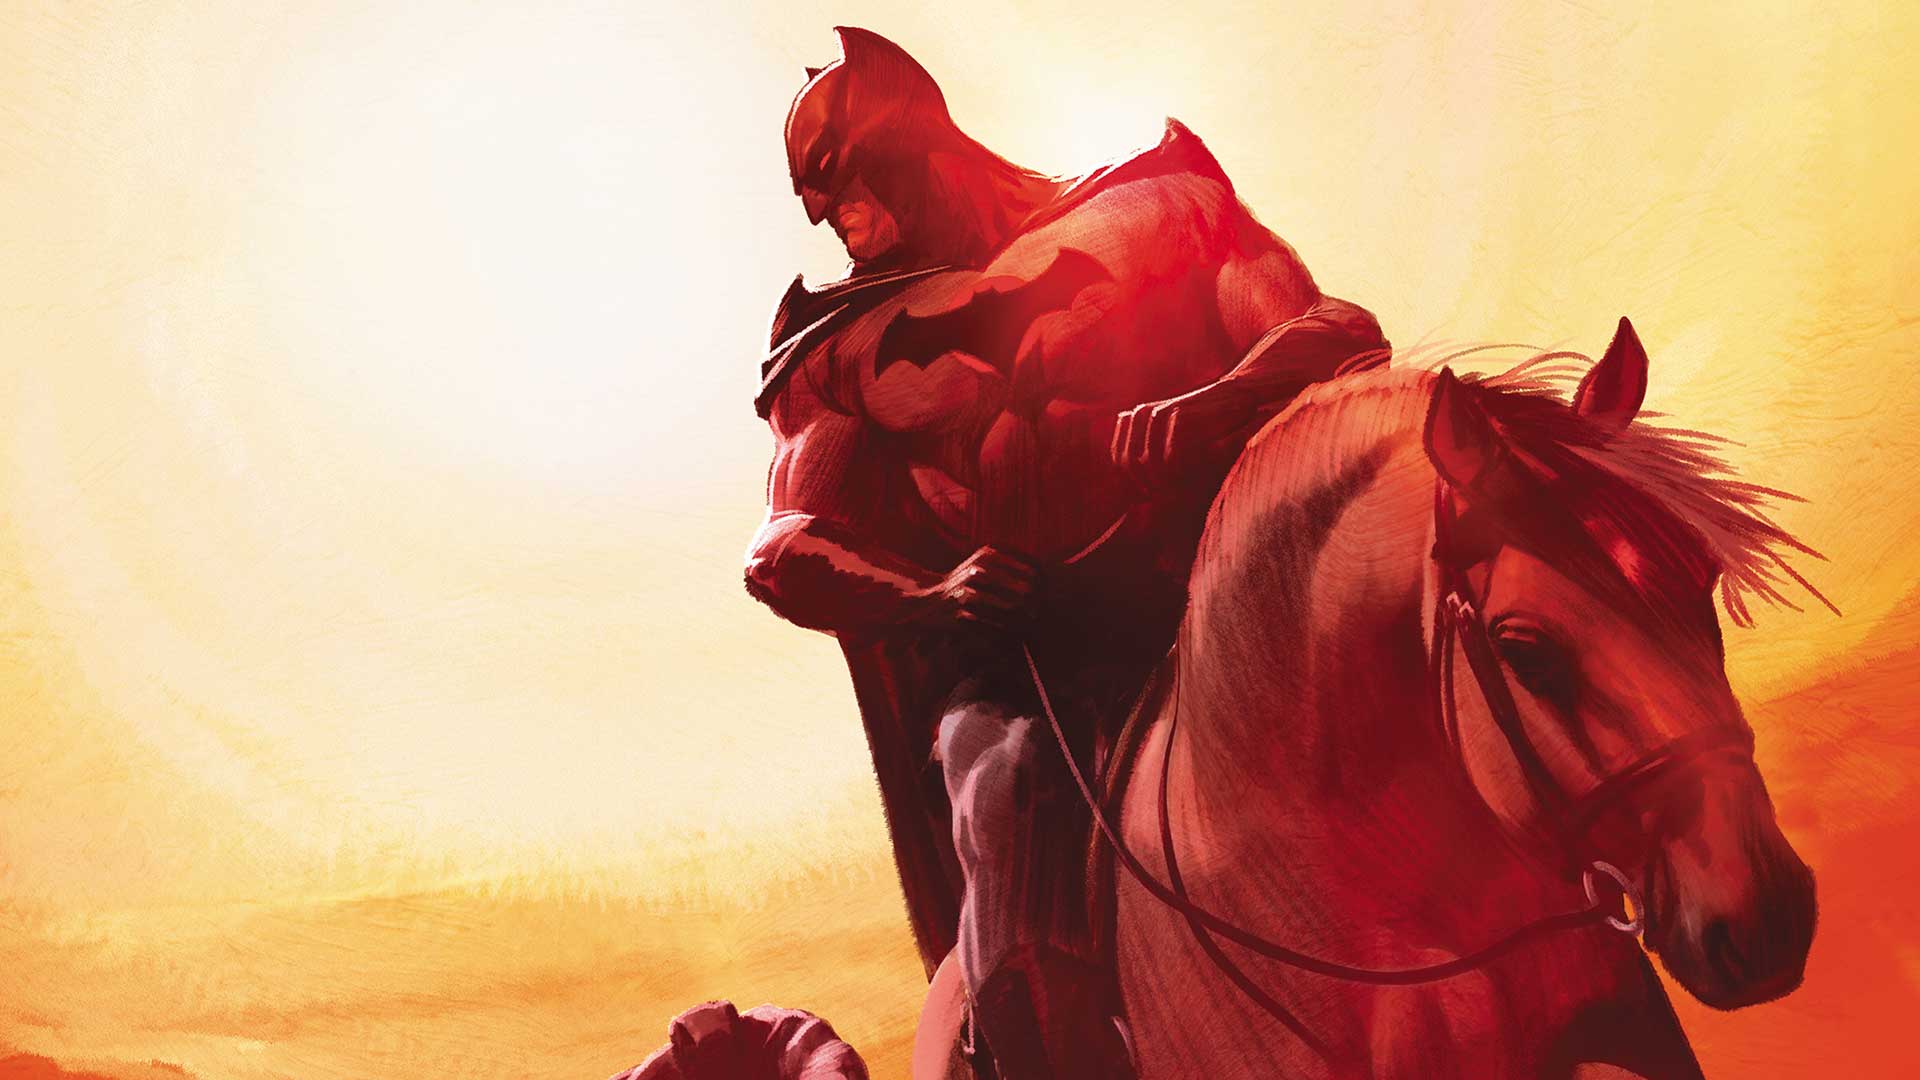 Batman #73 review: Death in the Desert